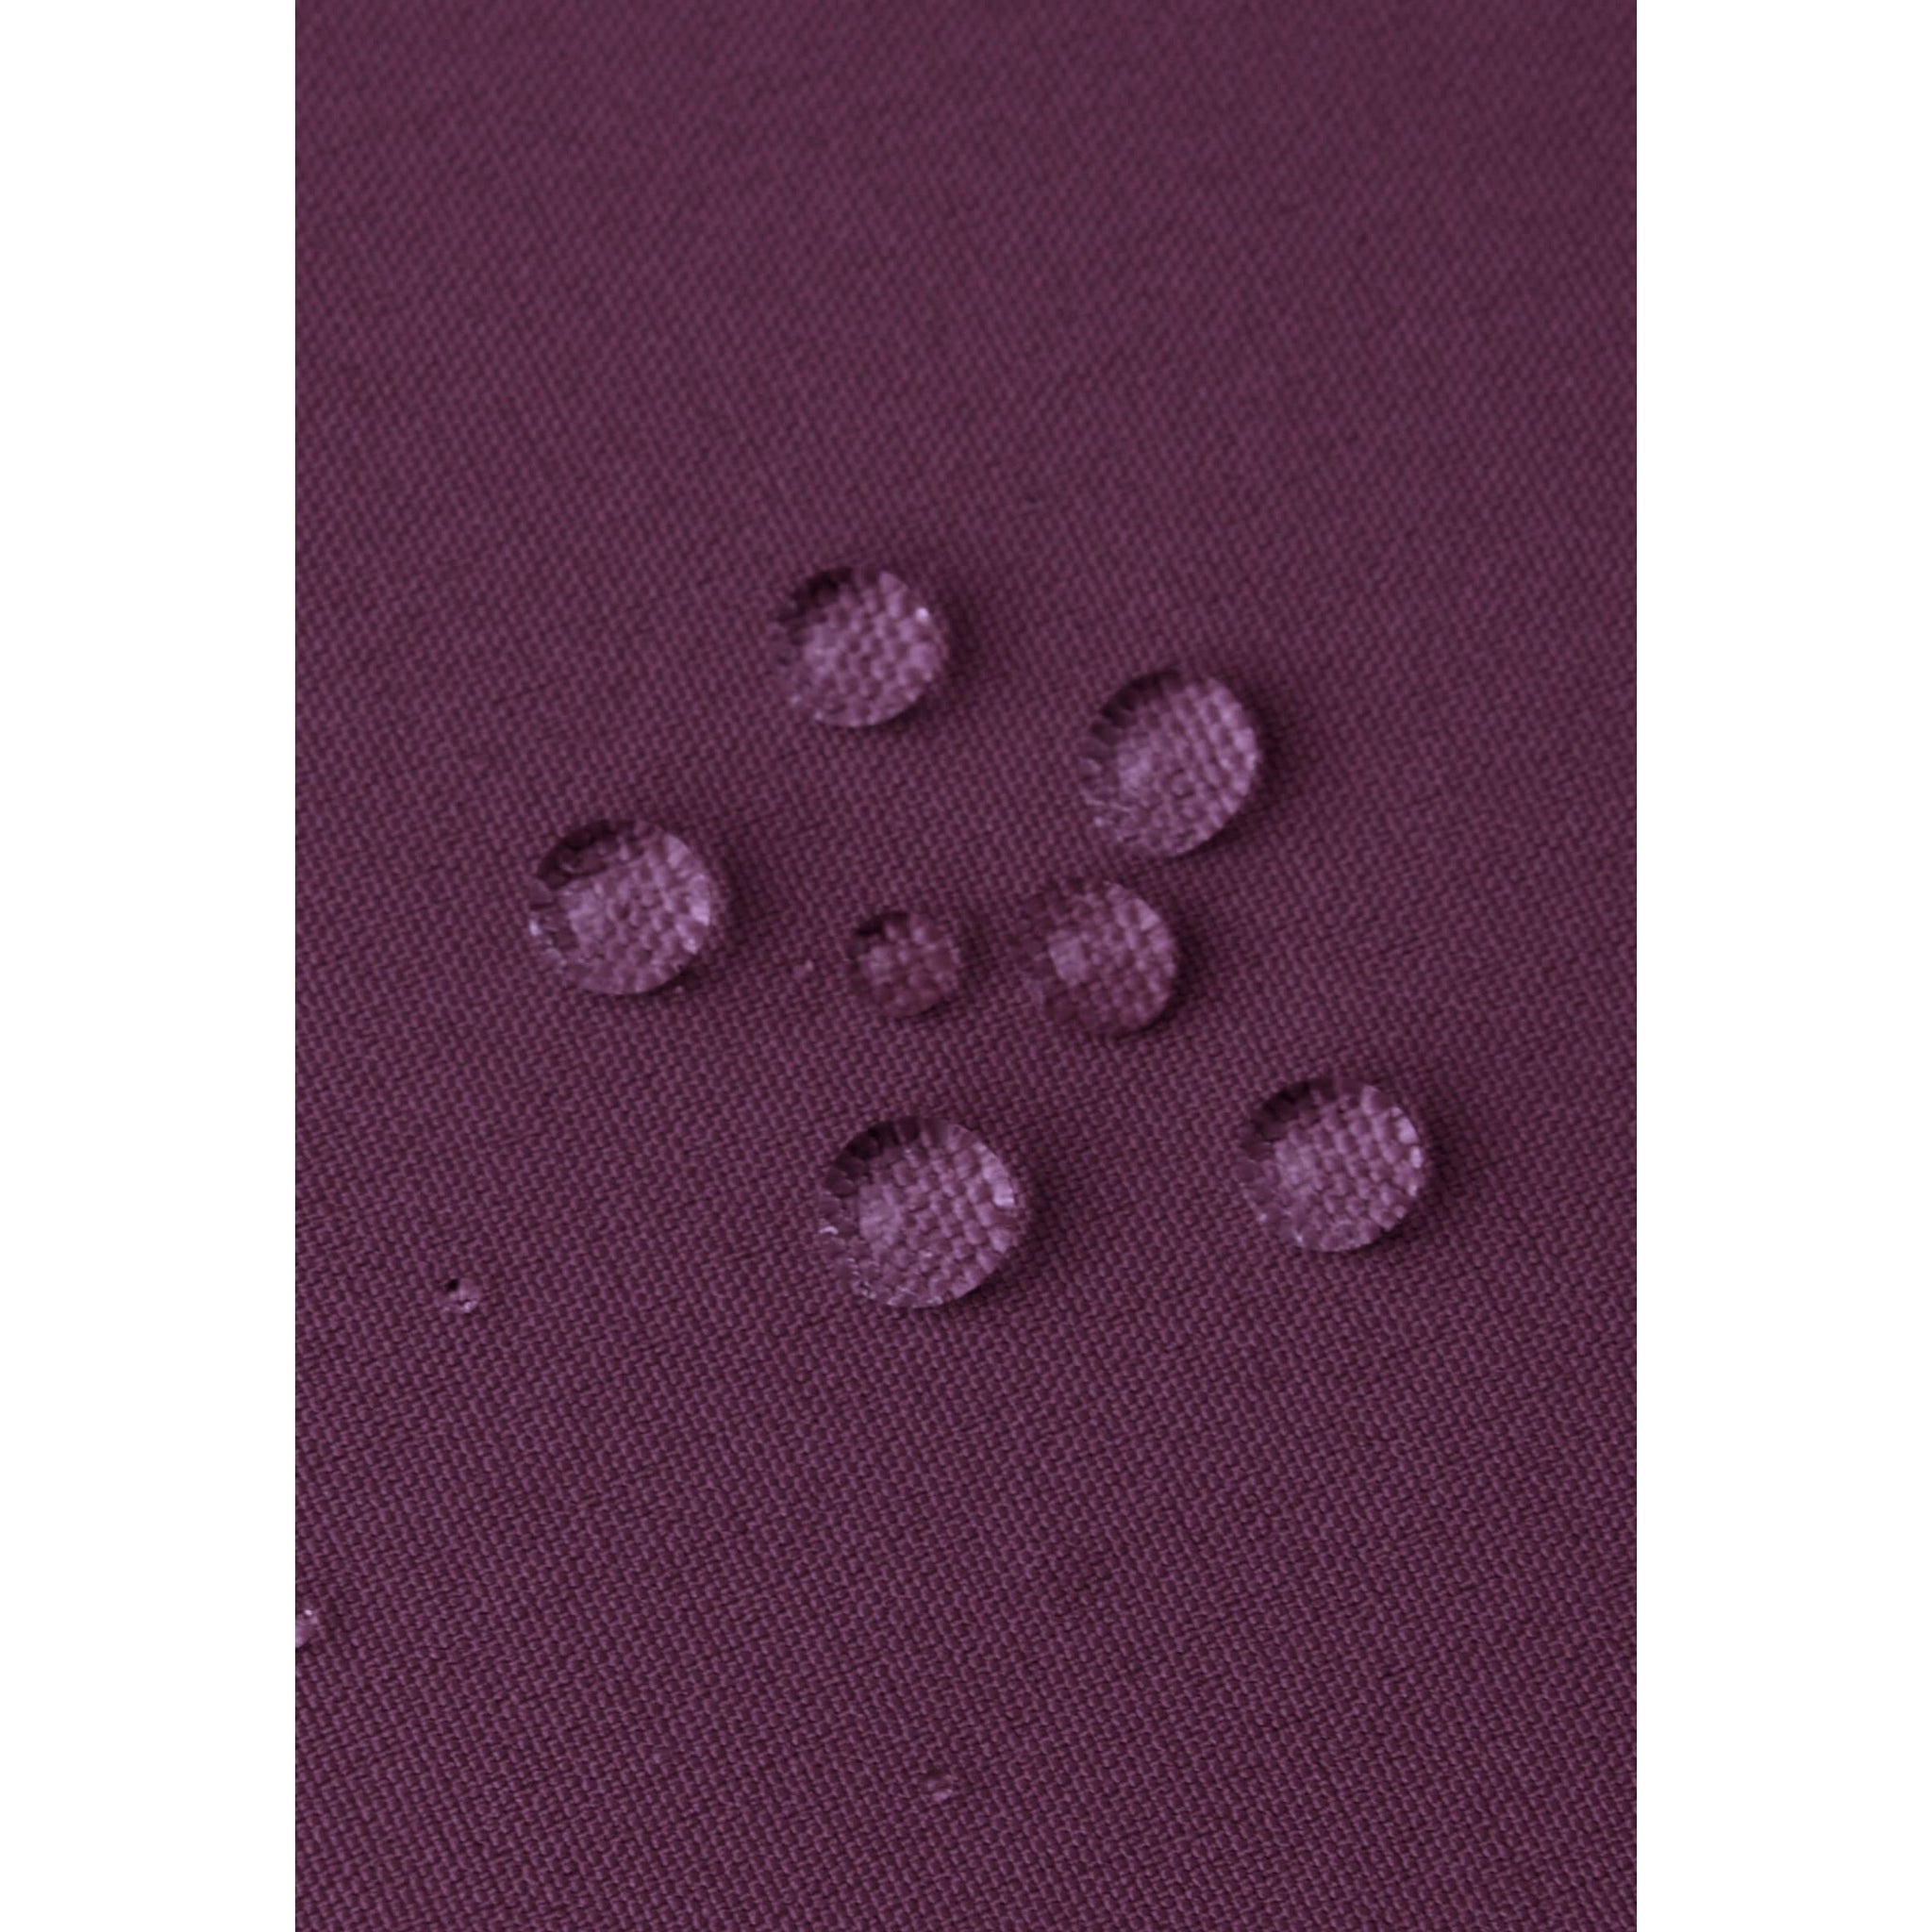 Pantaloni softshell Oikotie pentru copii Reima, Deep purple